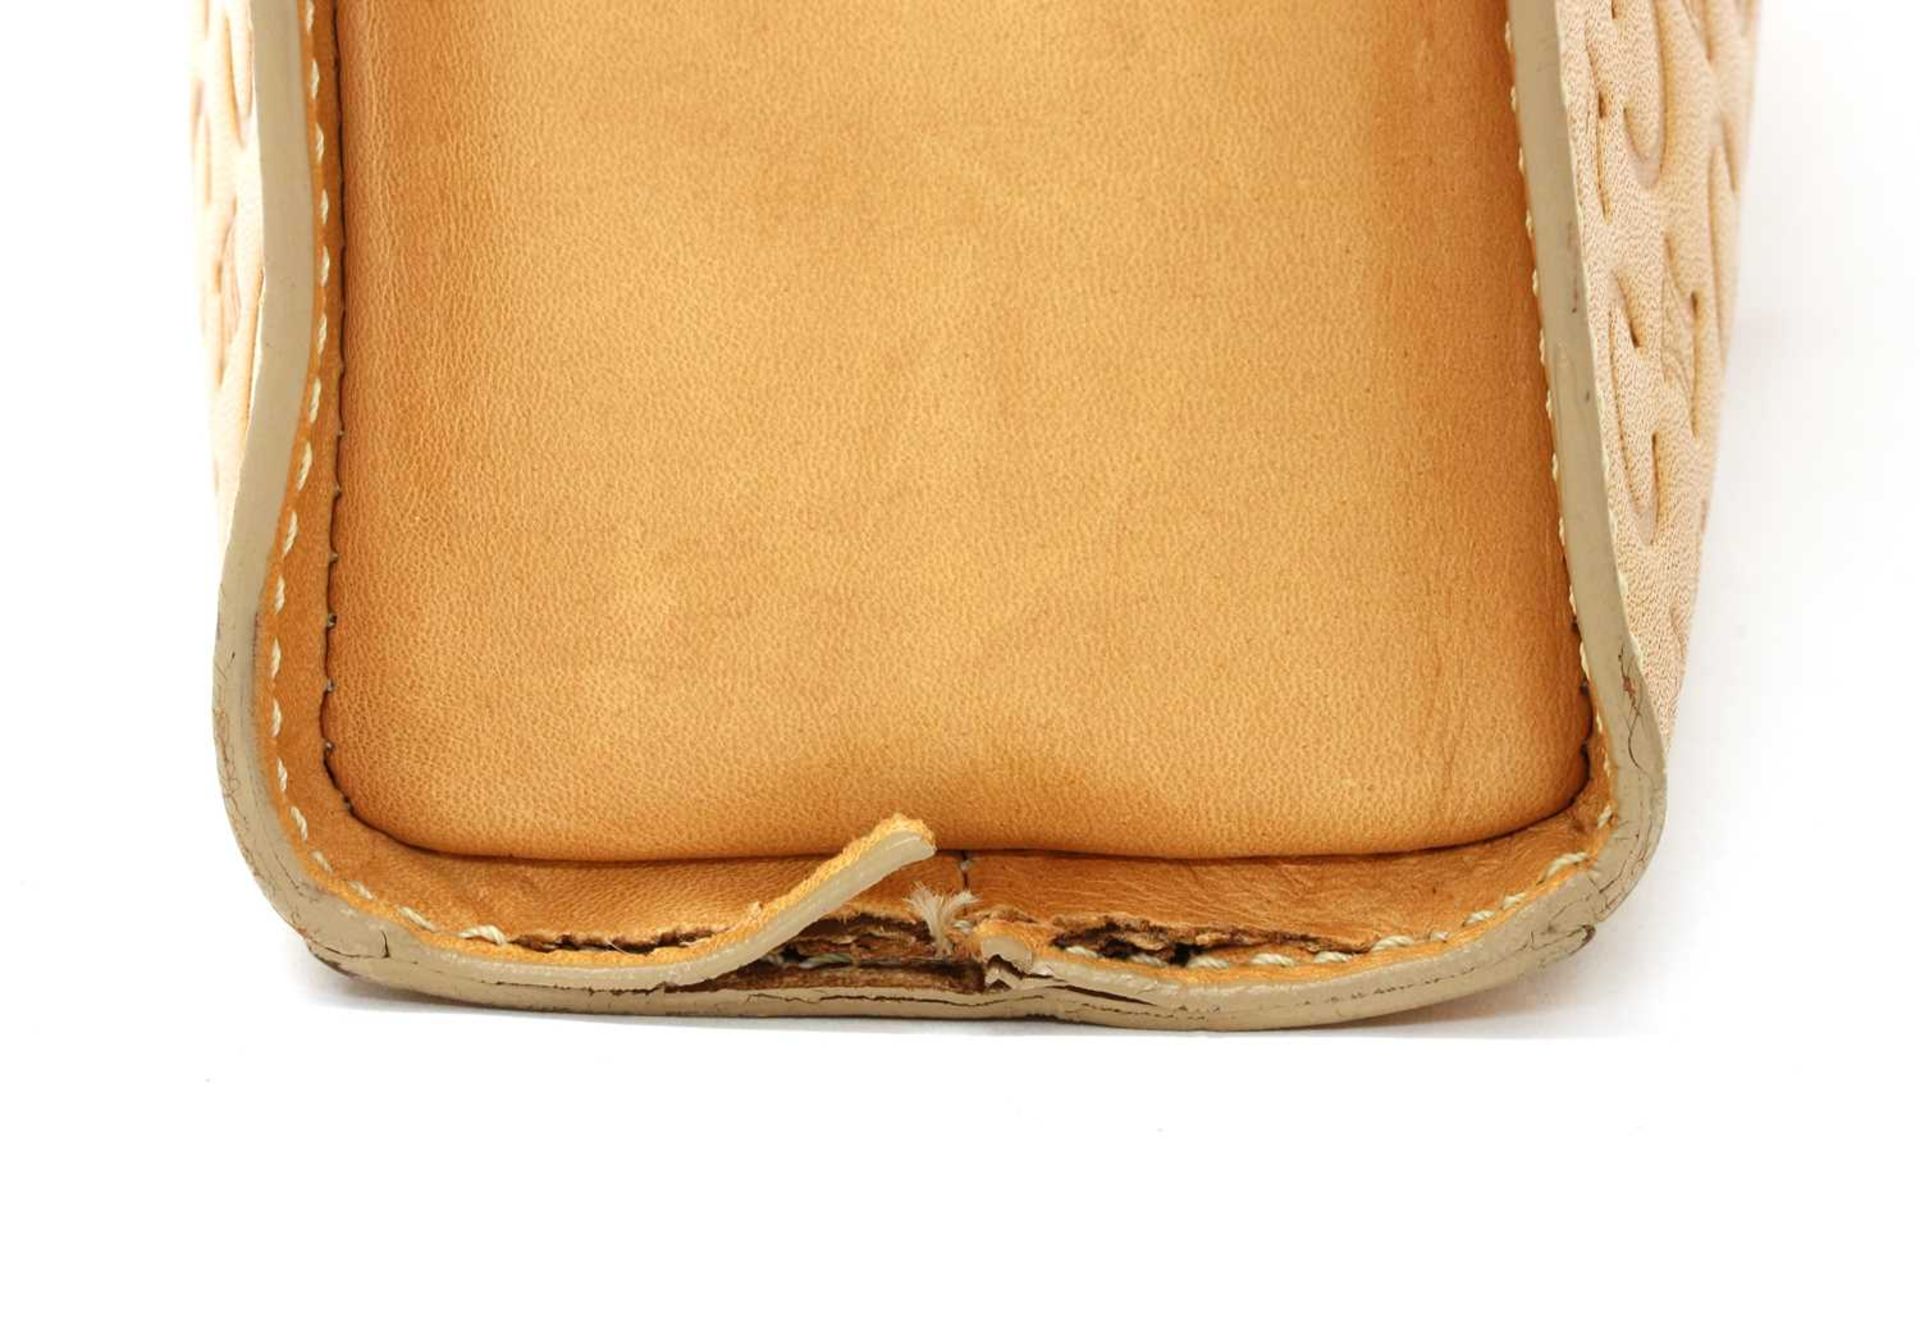 A Celine tan leather blason pattern handbag, - Image 3 of 3